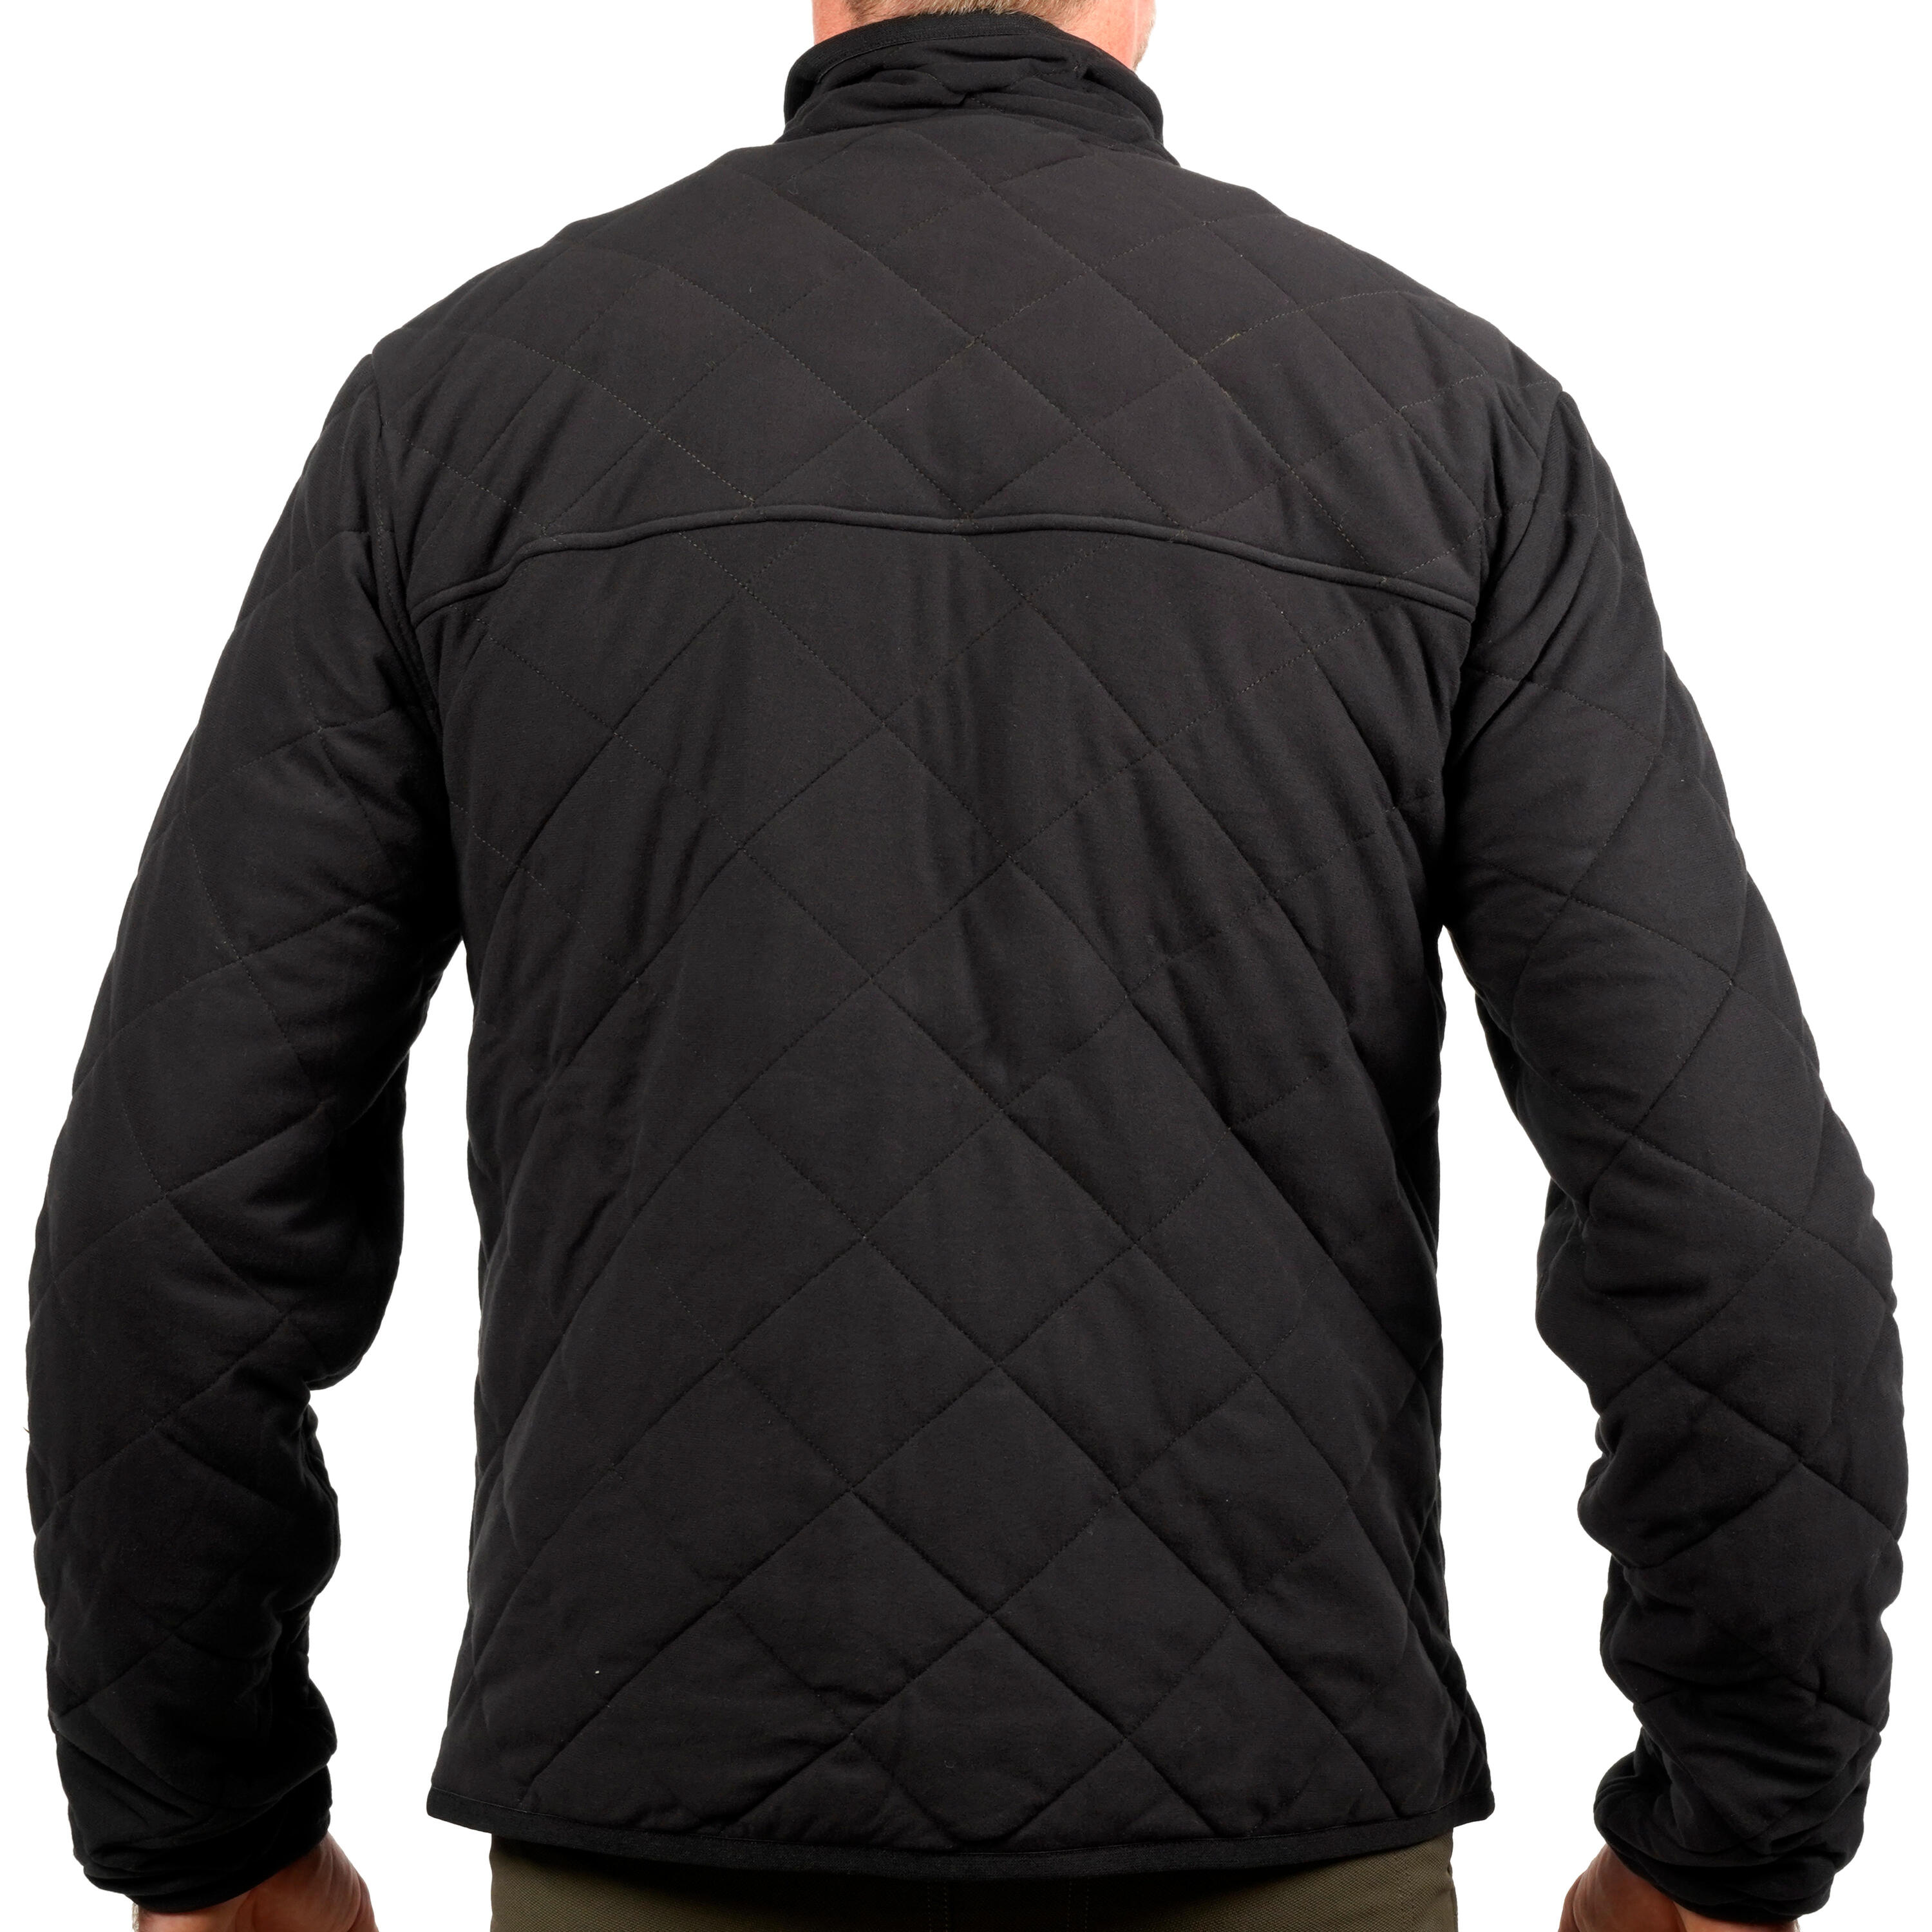 Silent padded Jacket black 500 2/7